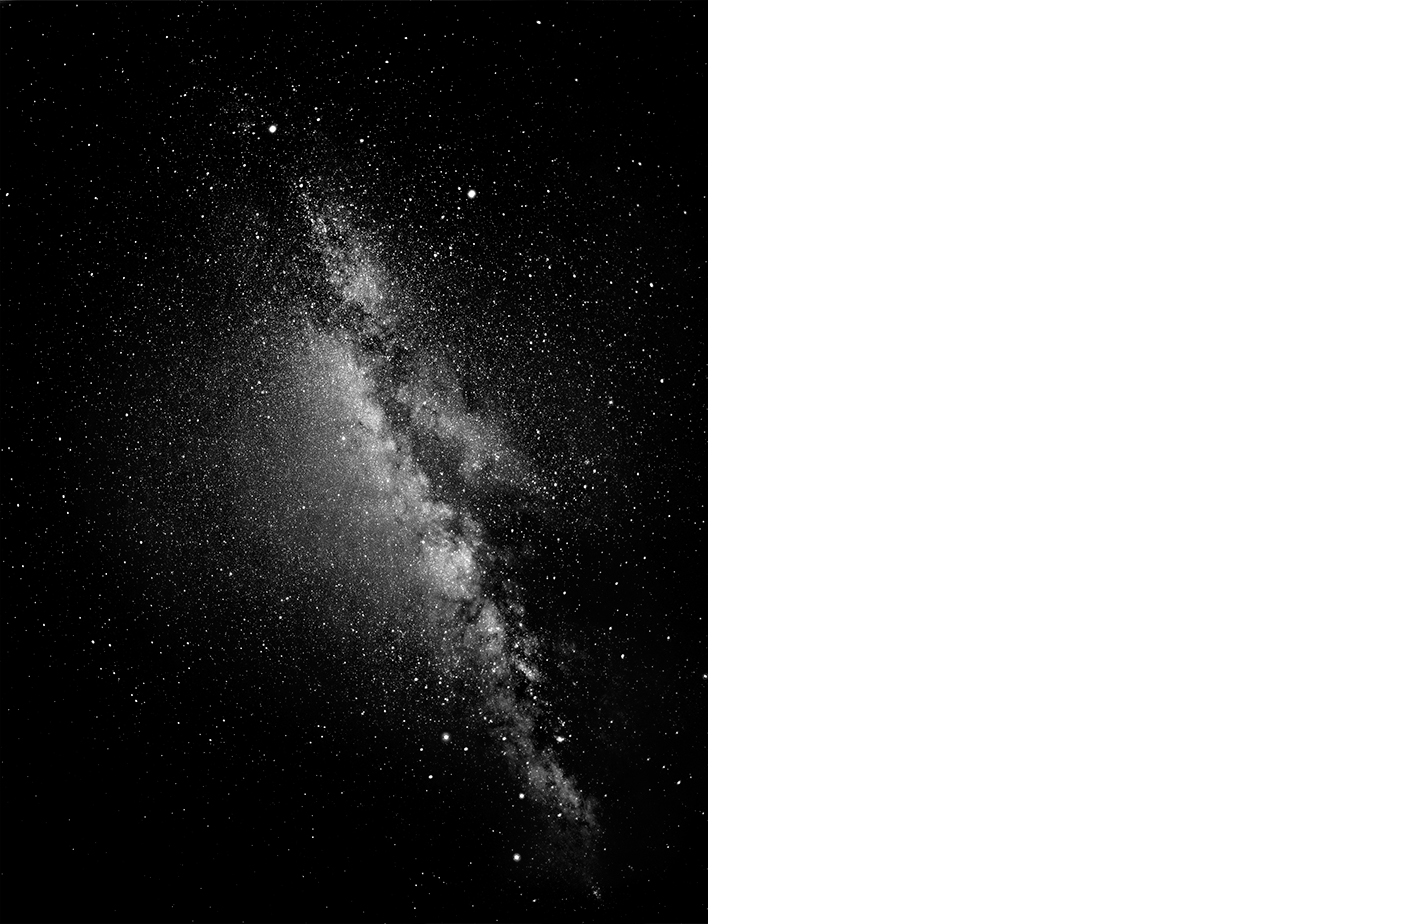  7044-01 Skies - Milky Way  Platinum Palladium Print 17.17 x 22.00 inch Image Size 22.00 x 29.00 Paper Size 1 BAT / 1 PP /&nbsp;3 AP / 12 EDP 